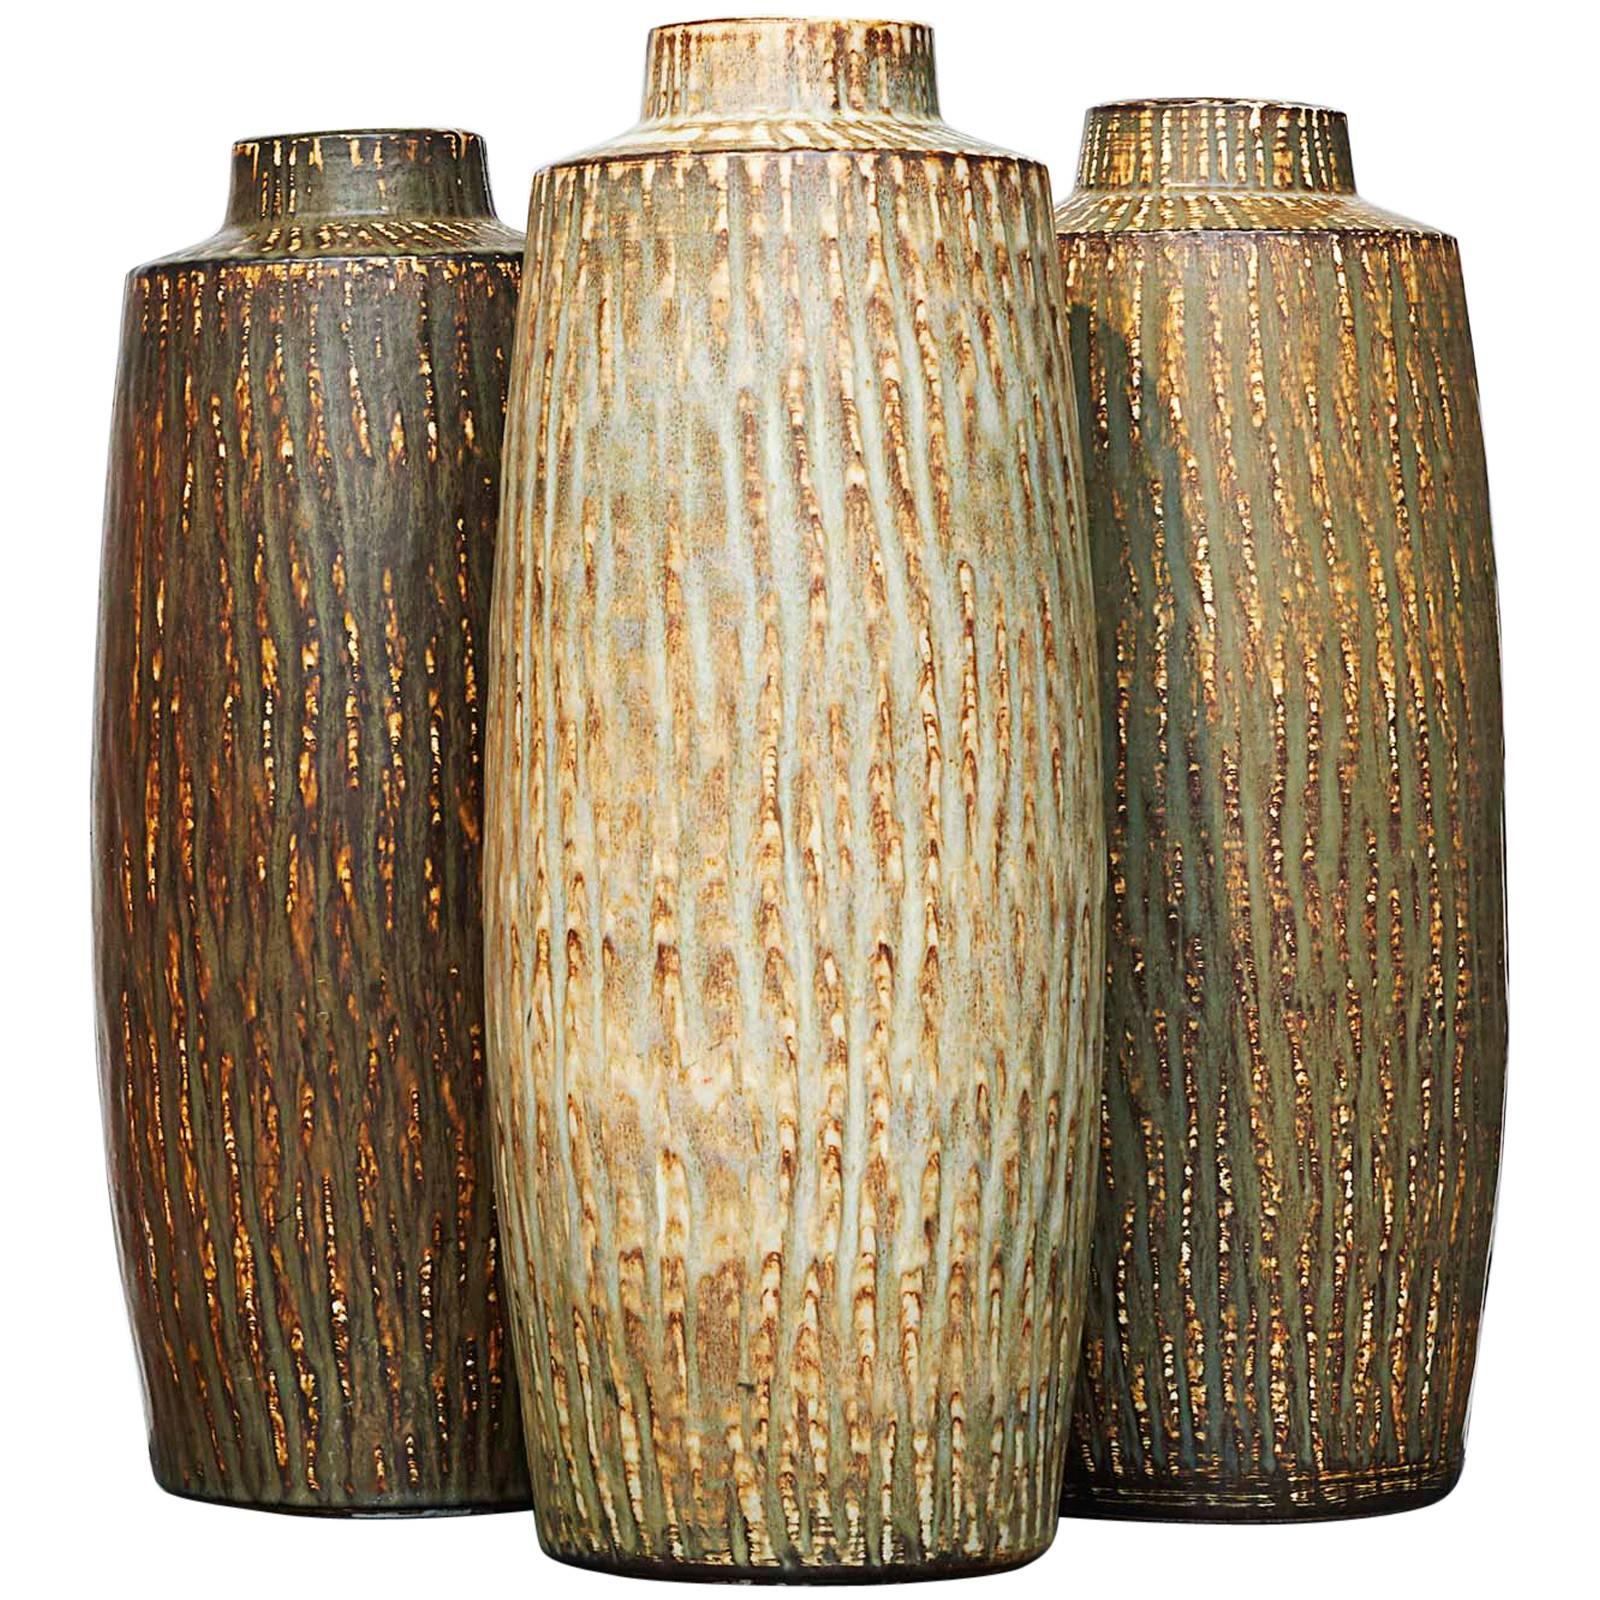 Large Vases by Gunner Nylund "Rubus"